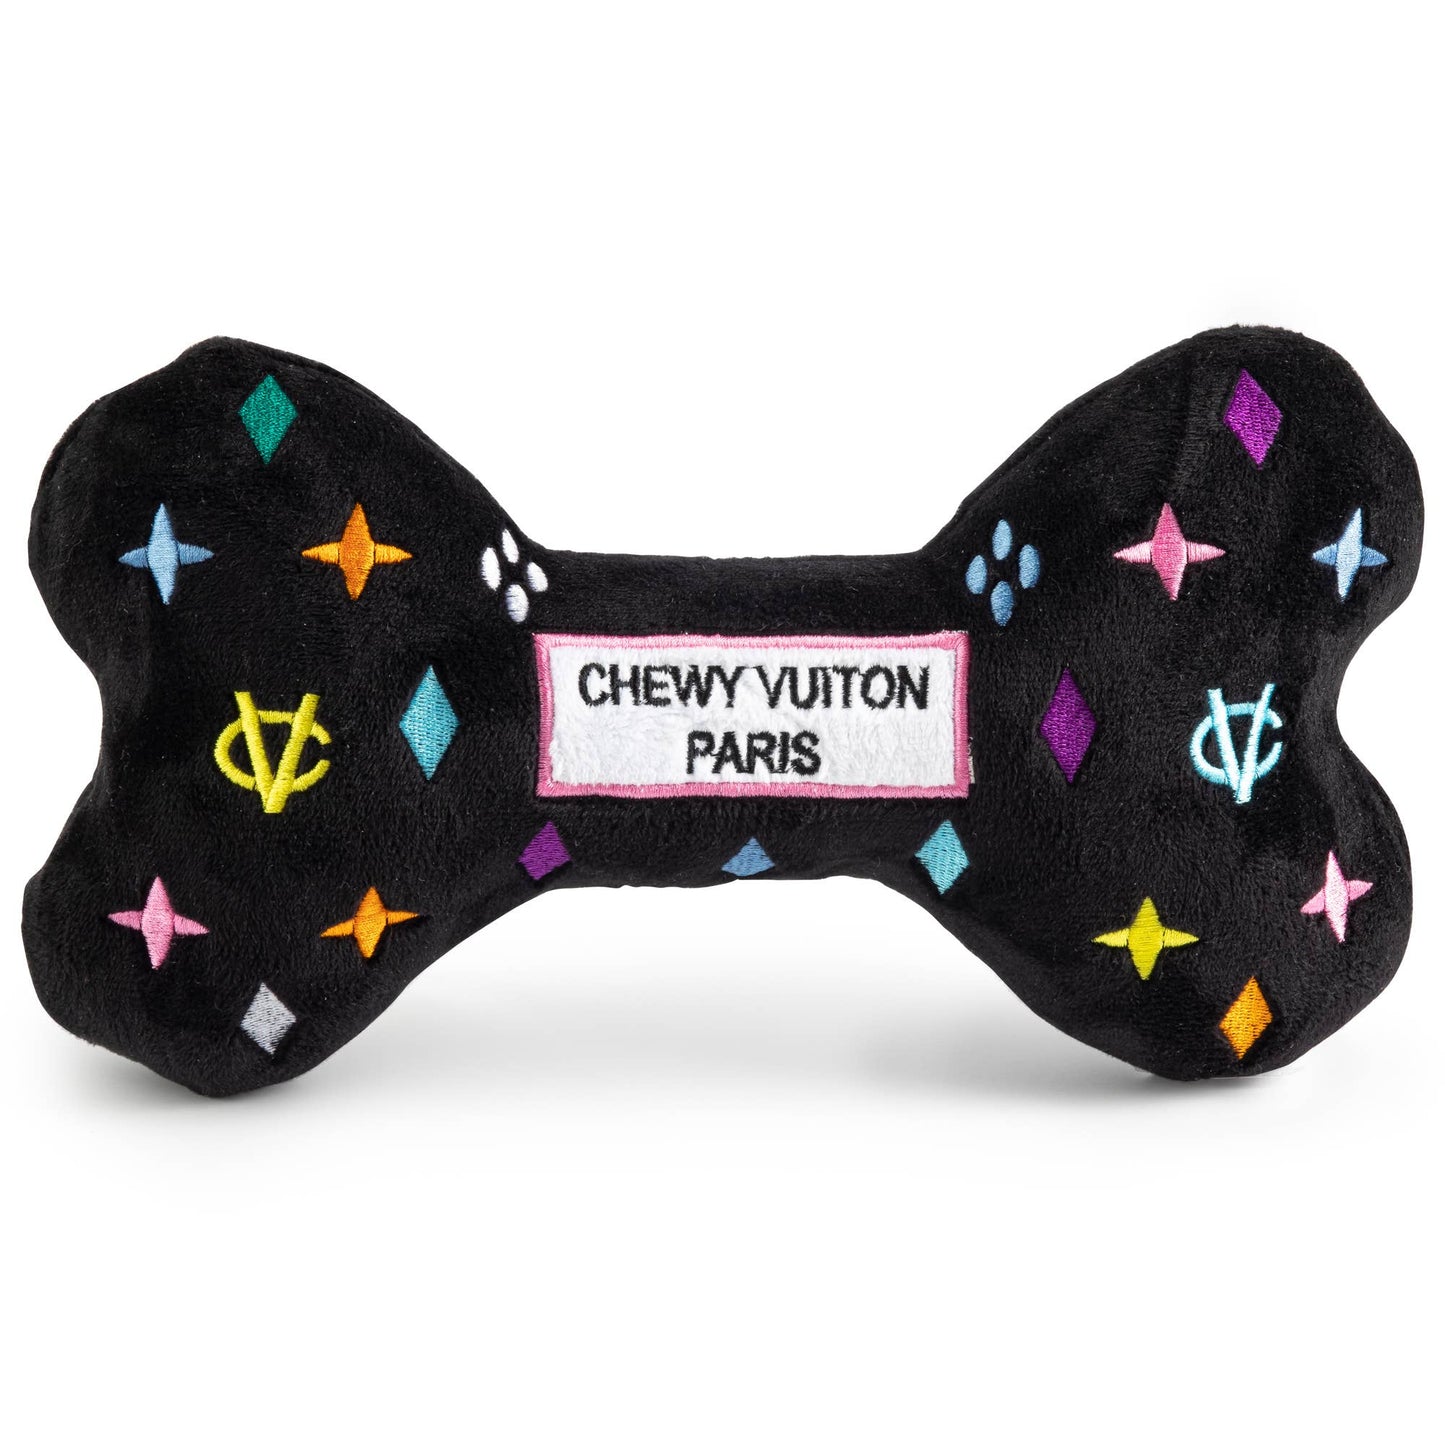 Black Chewy Vuiton Bone Dog Toy